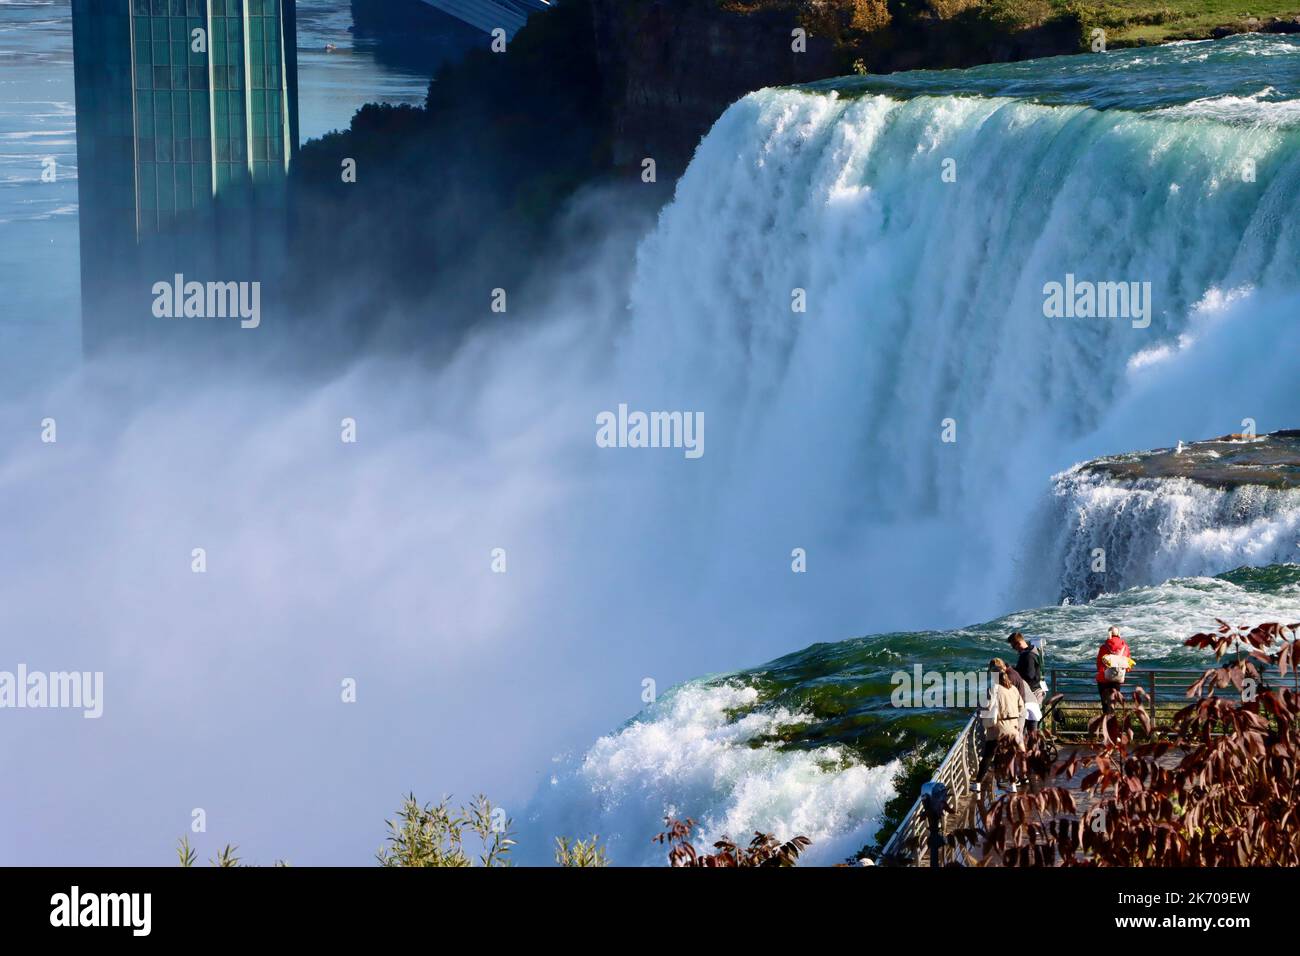 Spectators at the American Falls of Niagara Falls Stock Photo